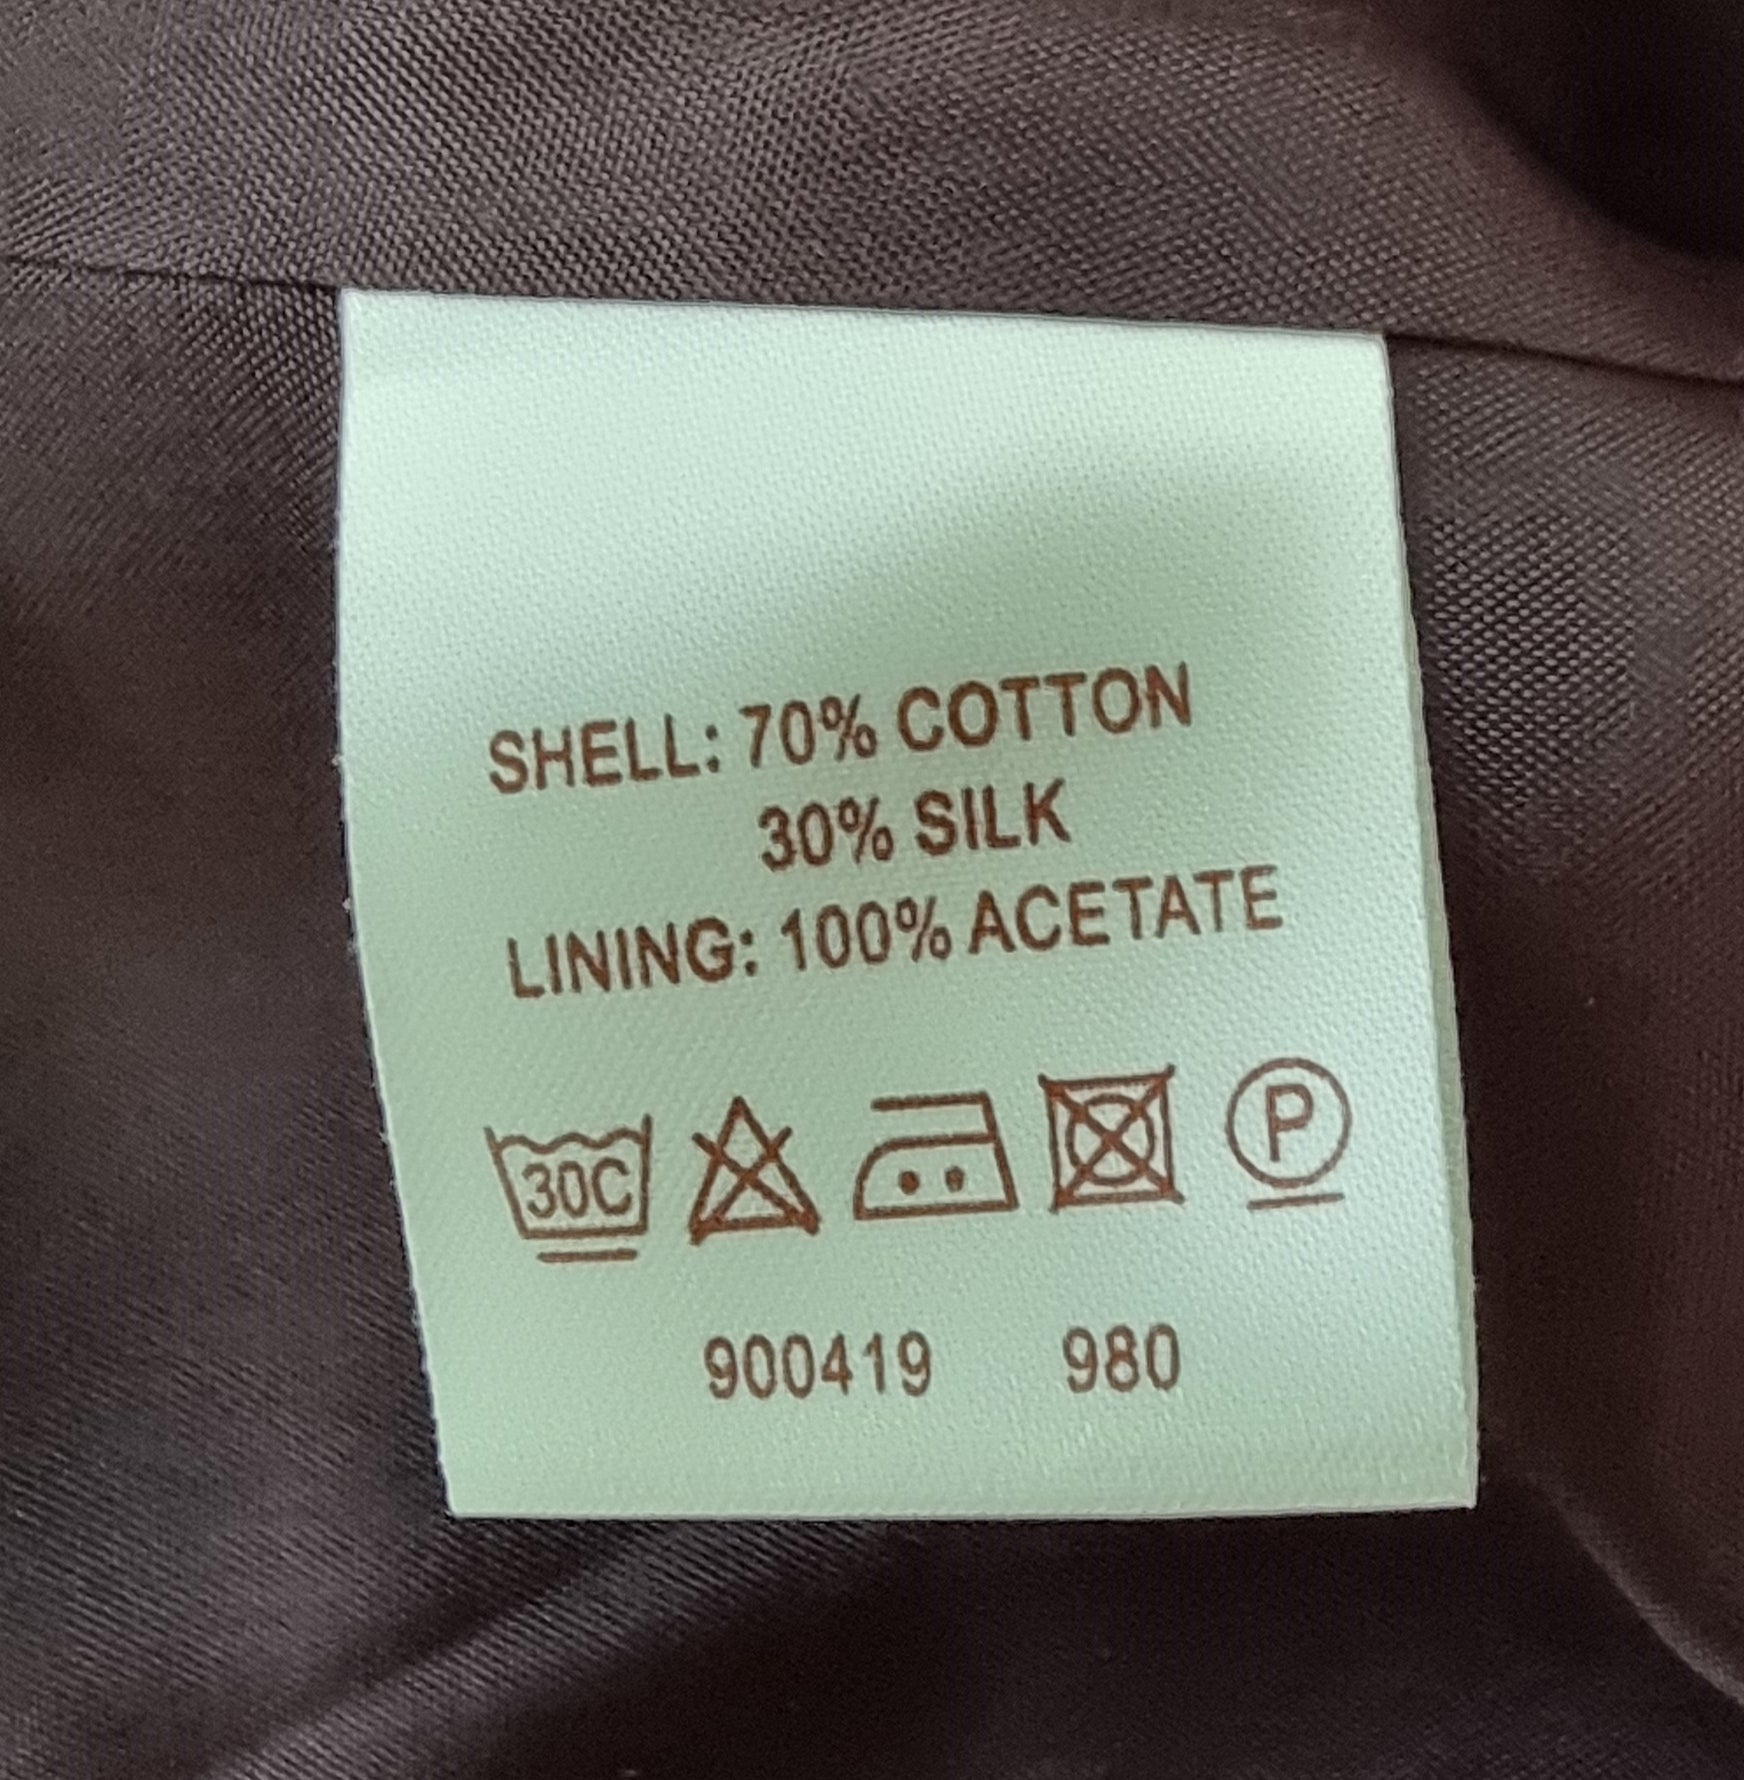 Phase Eight Brown Cotton Lined Cropped Jacket Bolero UK 10 US 6 EU 38 Timeless Fashions